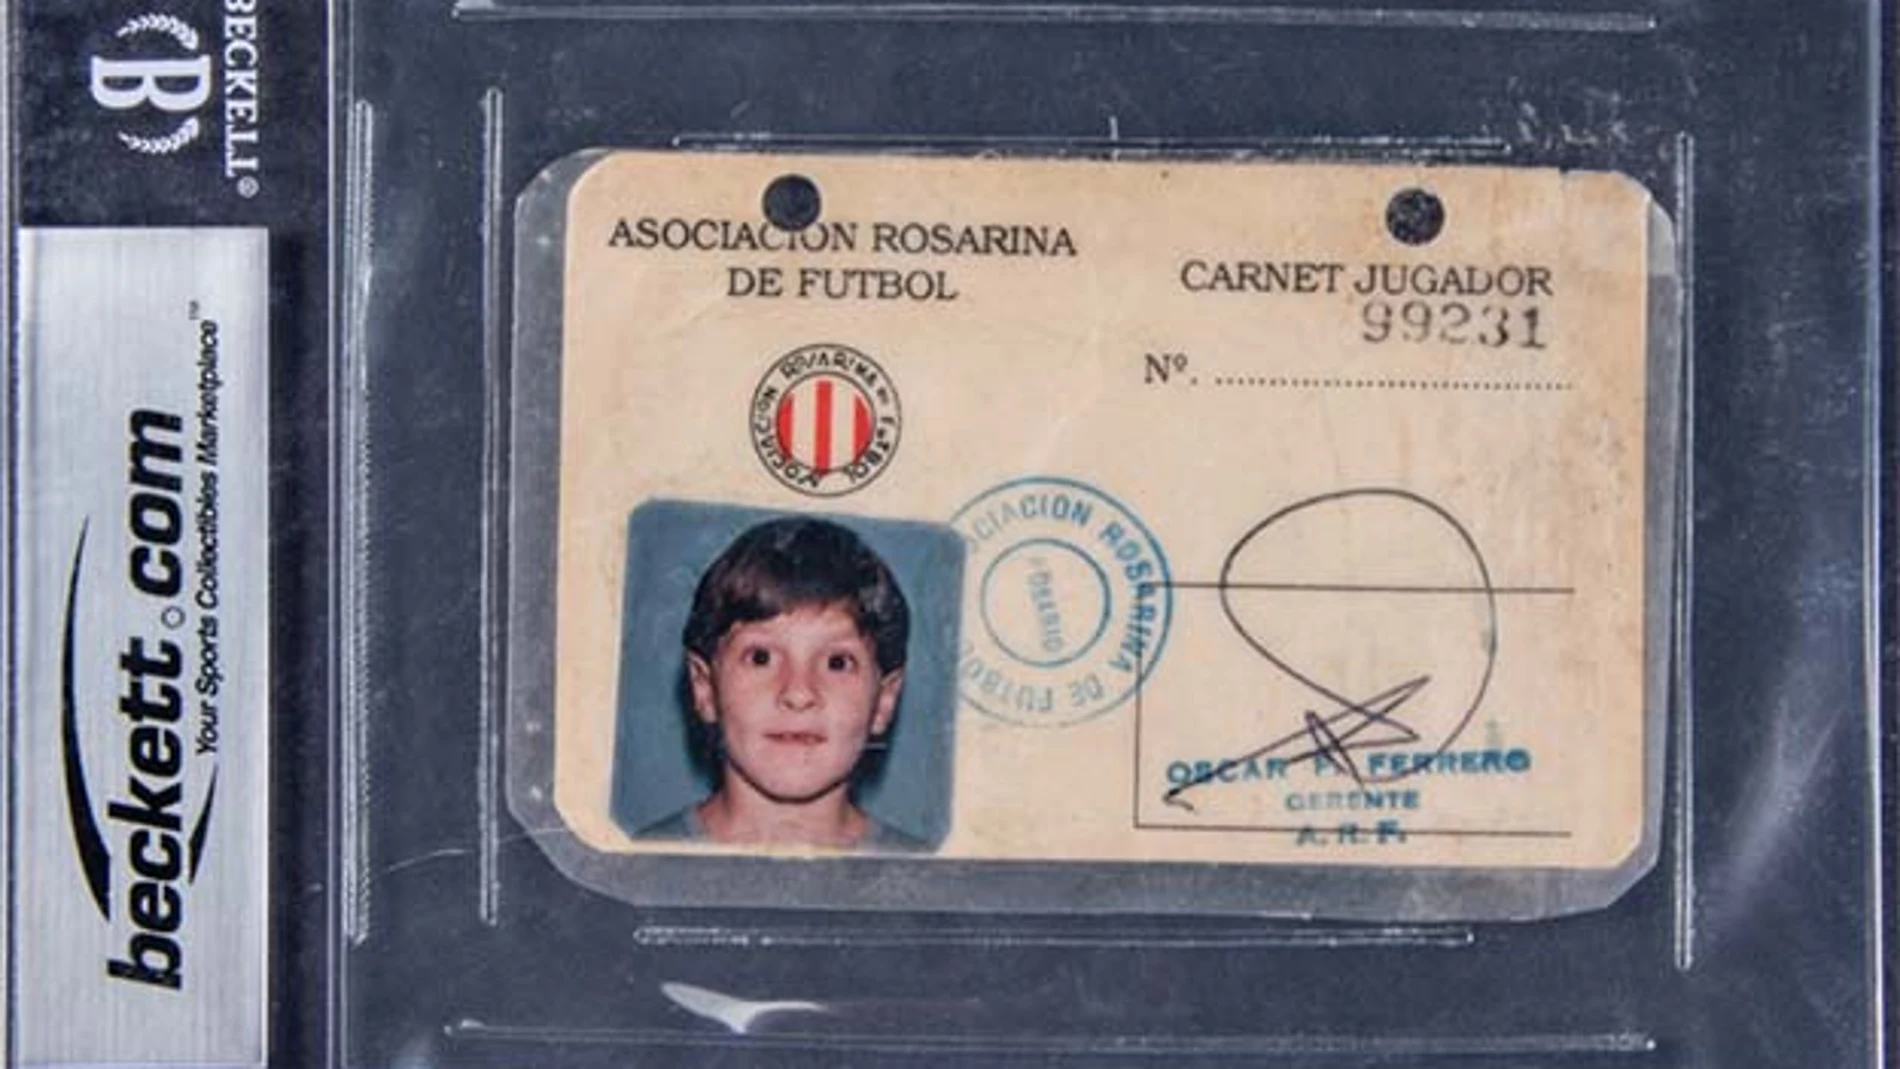 Carnet de Leo Messi con su firma subastado por Goldin Auctions.